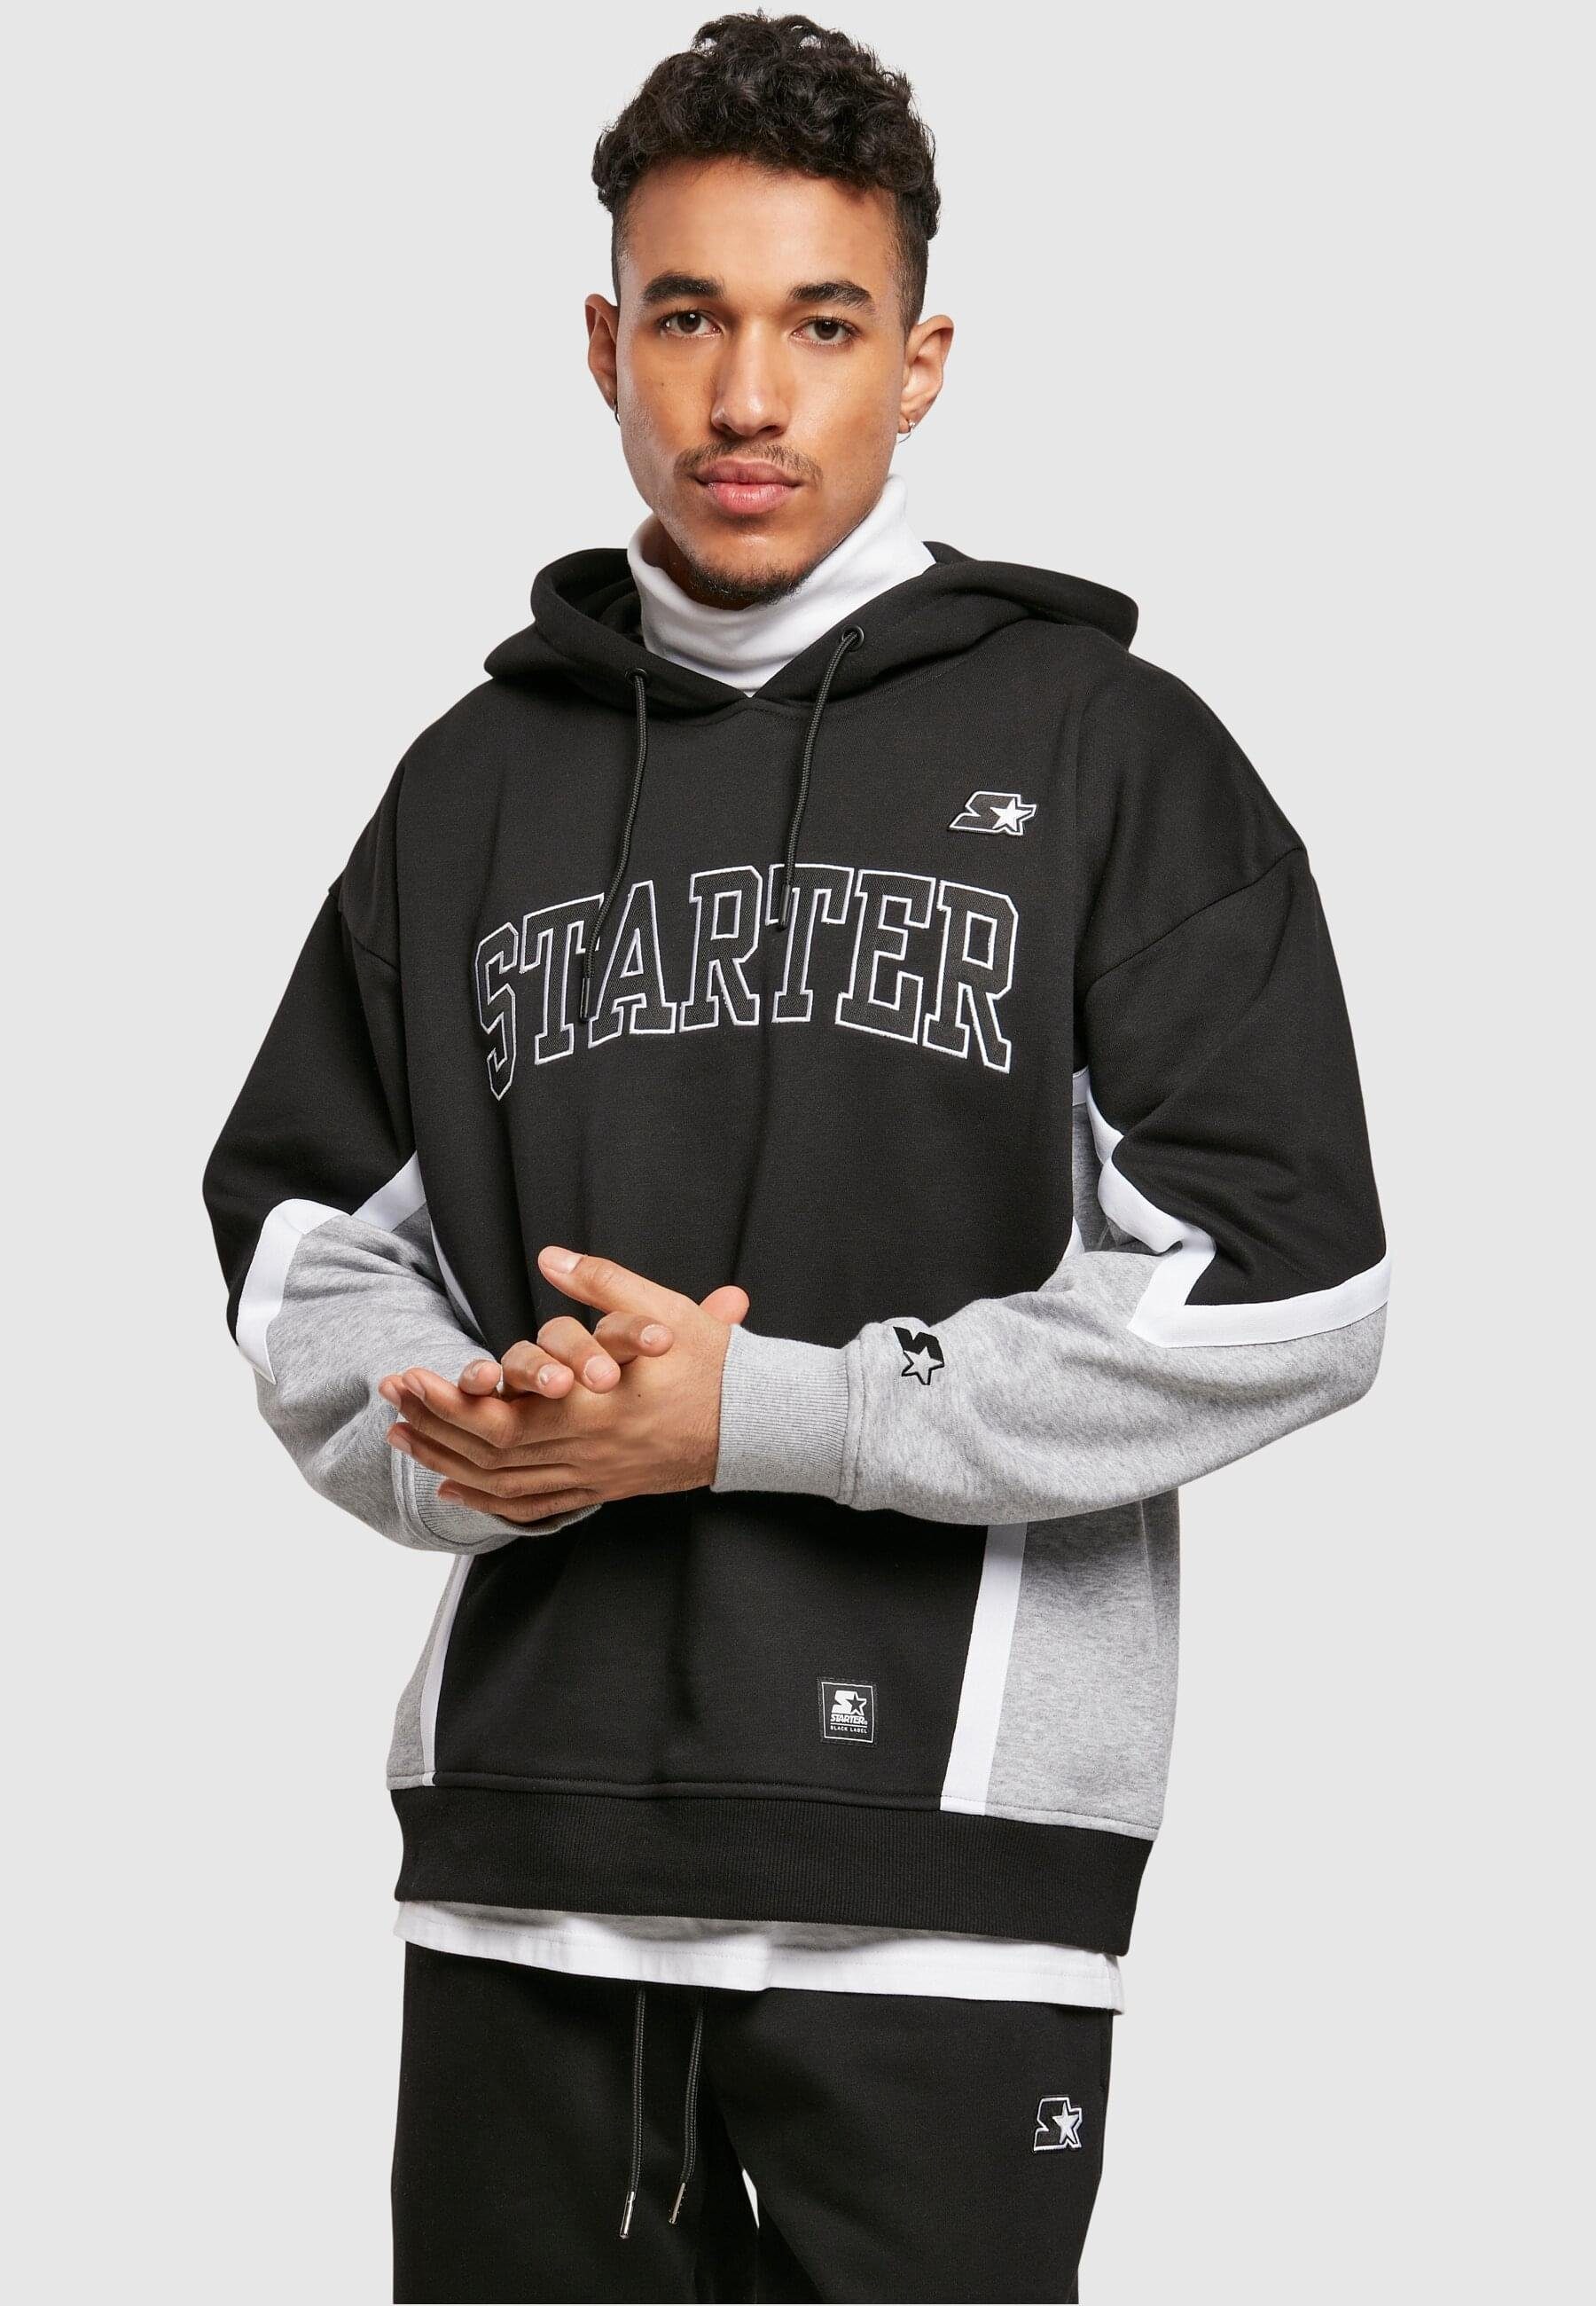 Starter Black Starter Hoody Herren Sweater black/heathergrey Throwback (1-tlg) Label